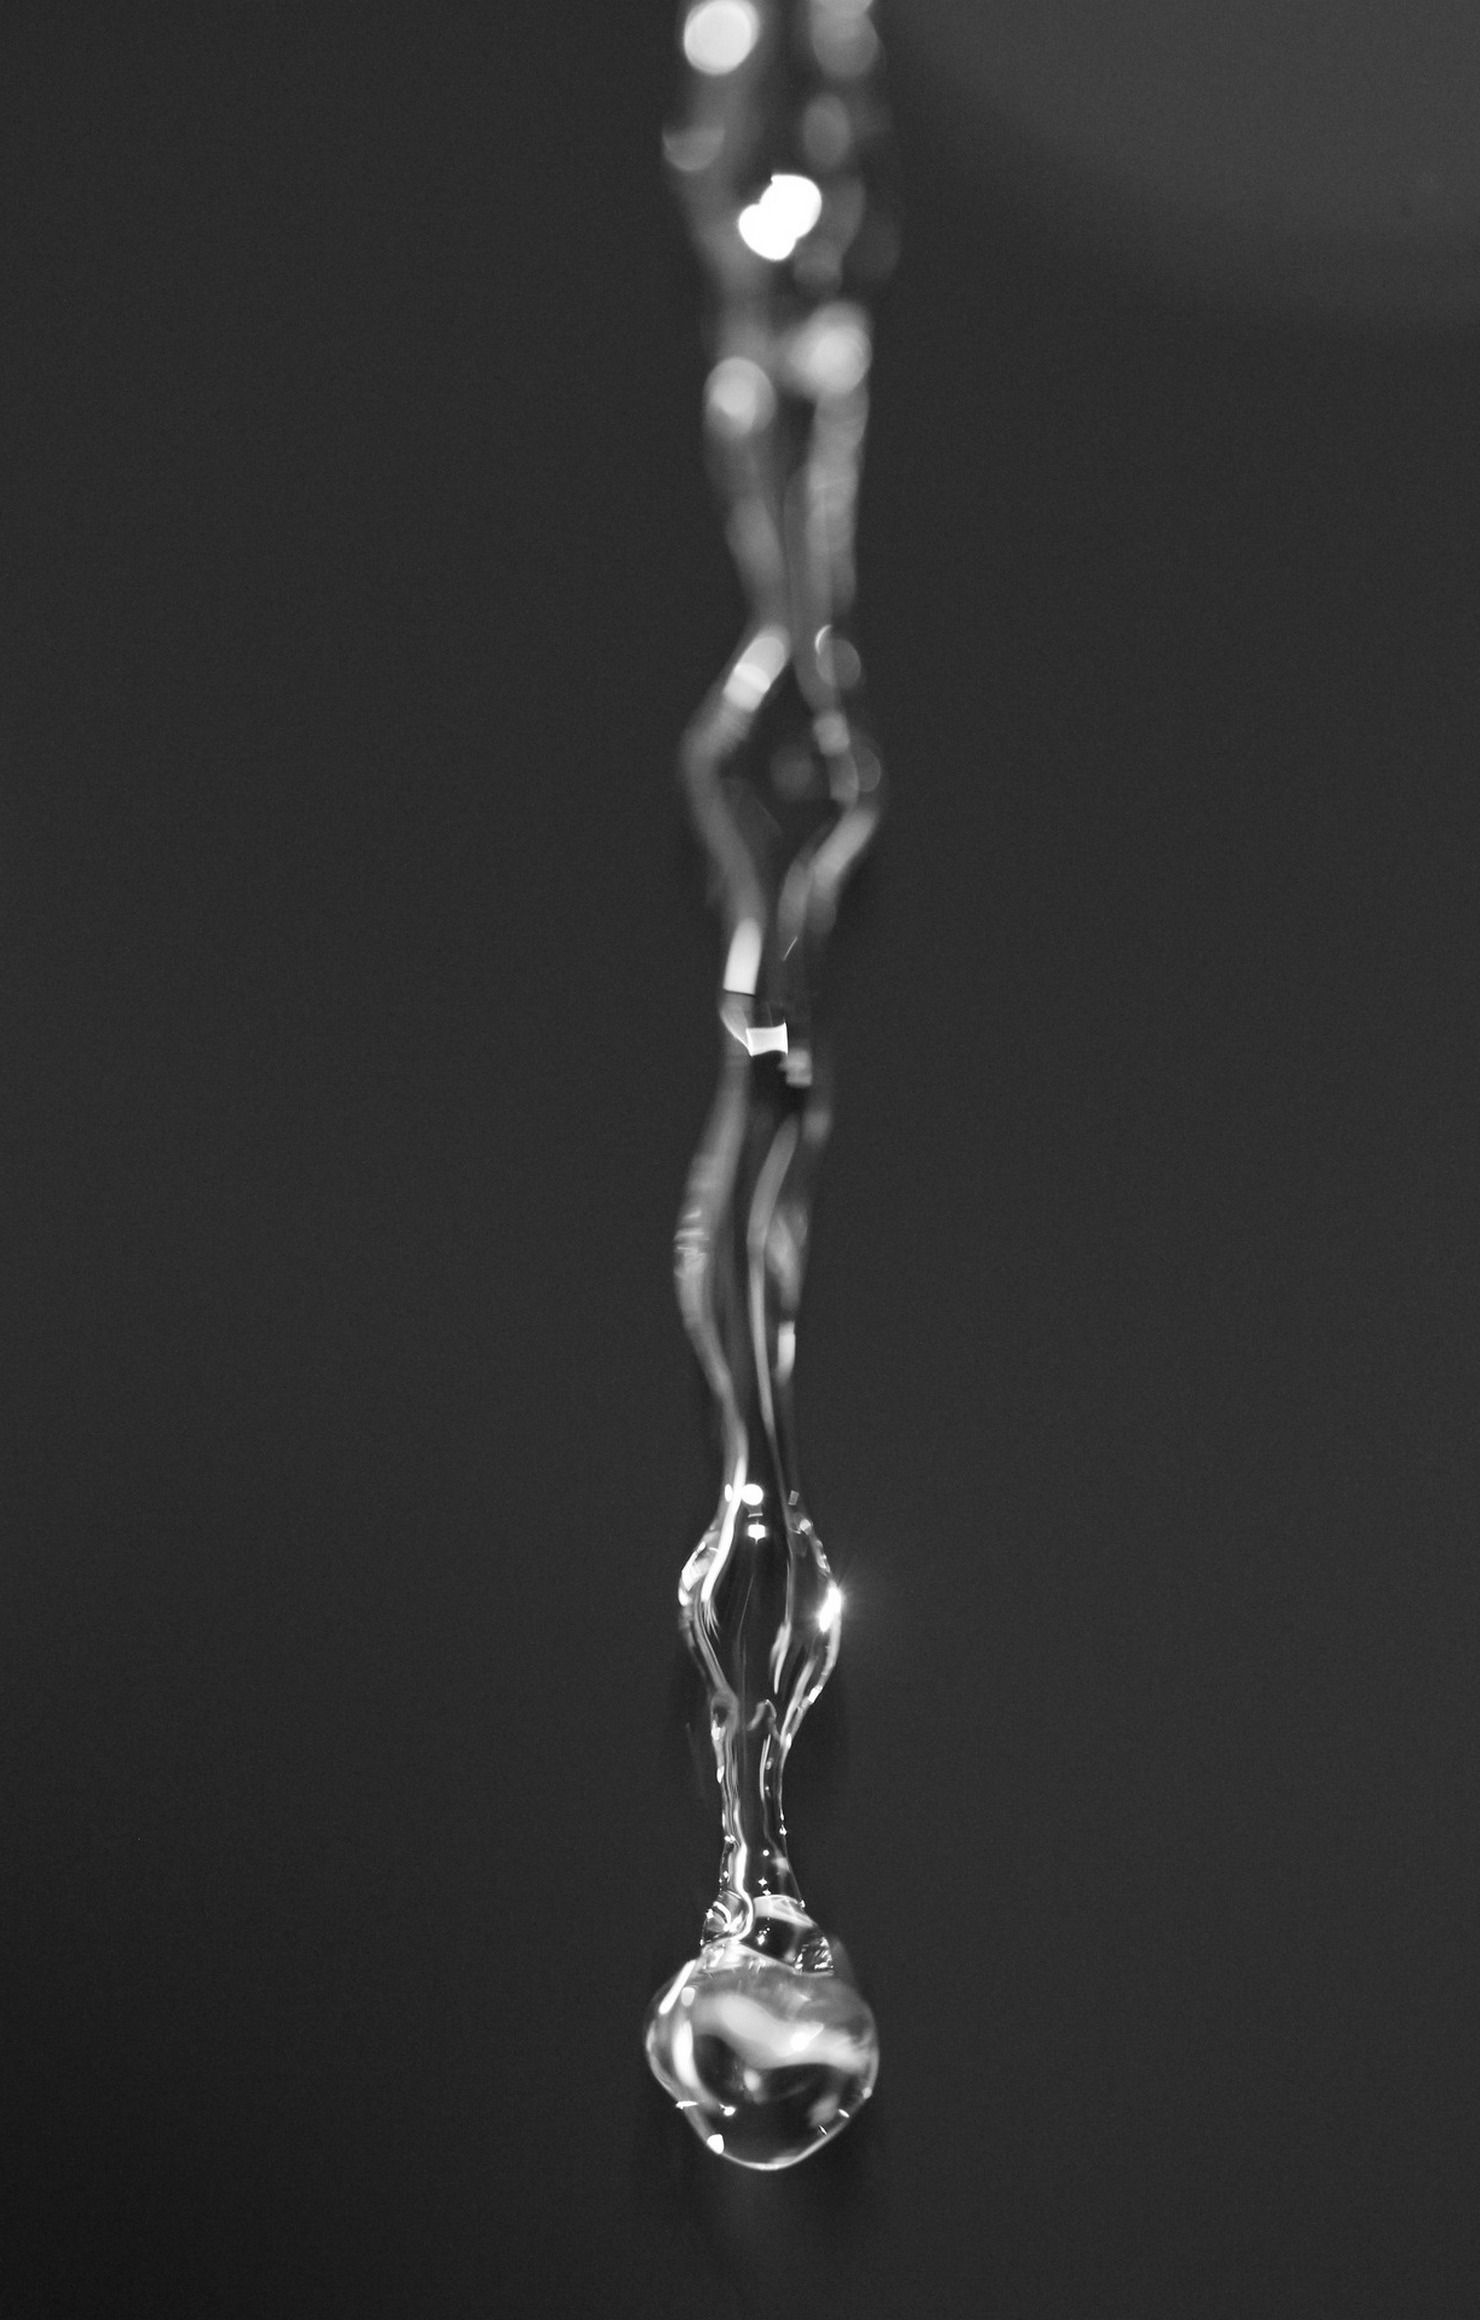 Drop Water Macro Wallpaper Retina Drop Notch Wallpaper HD Download